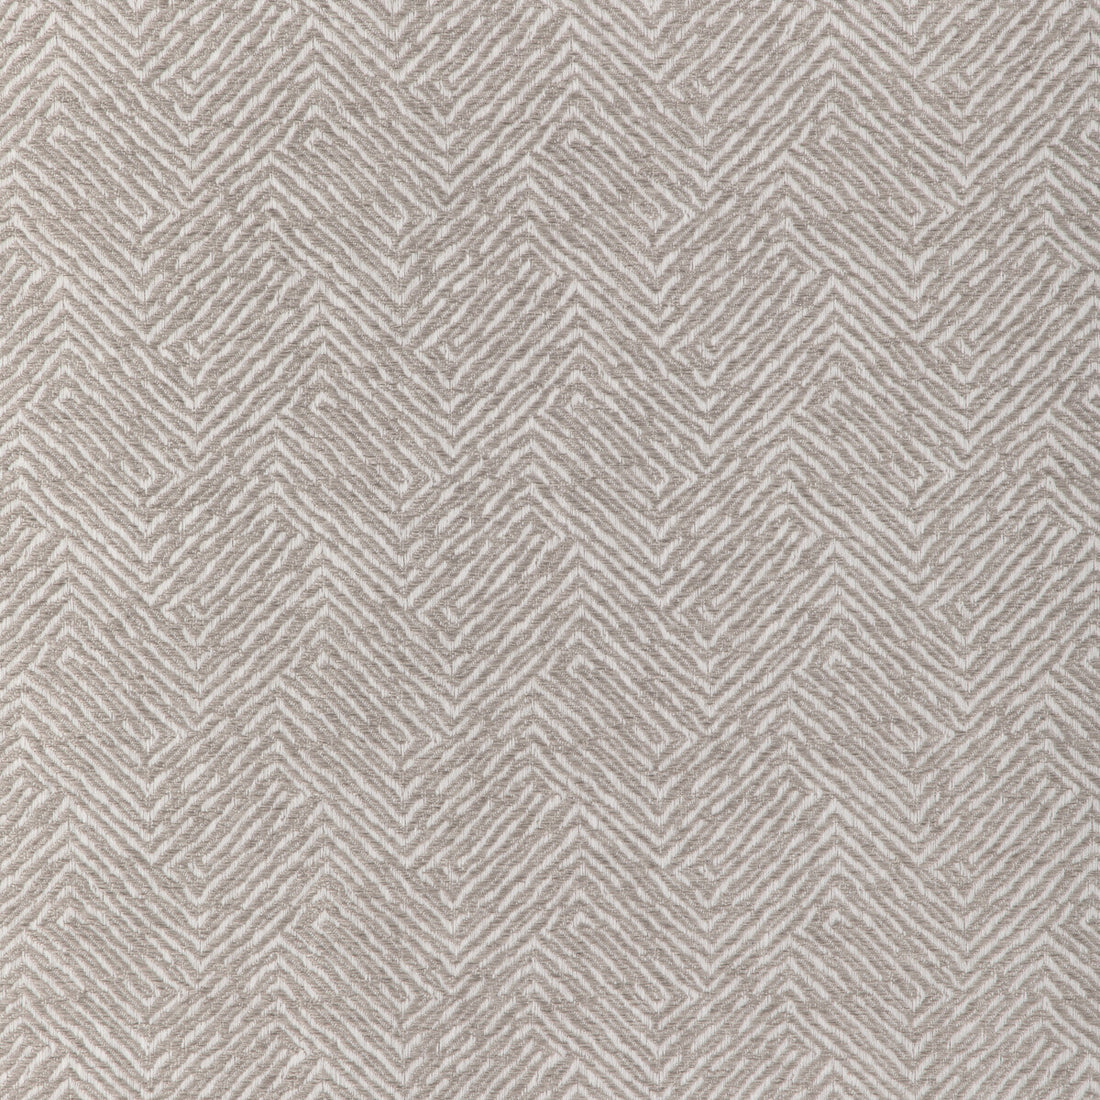 Kravet Smart fabric in 36667-1101 color - pattern 36667.1101.0 - by Kravet Smart in the Performance Kravetarmor collection